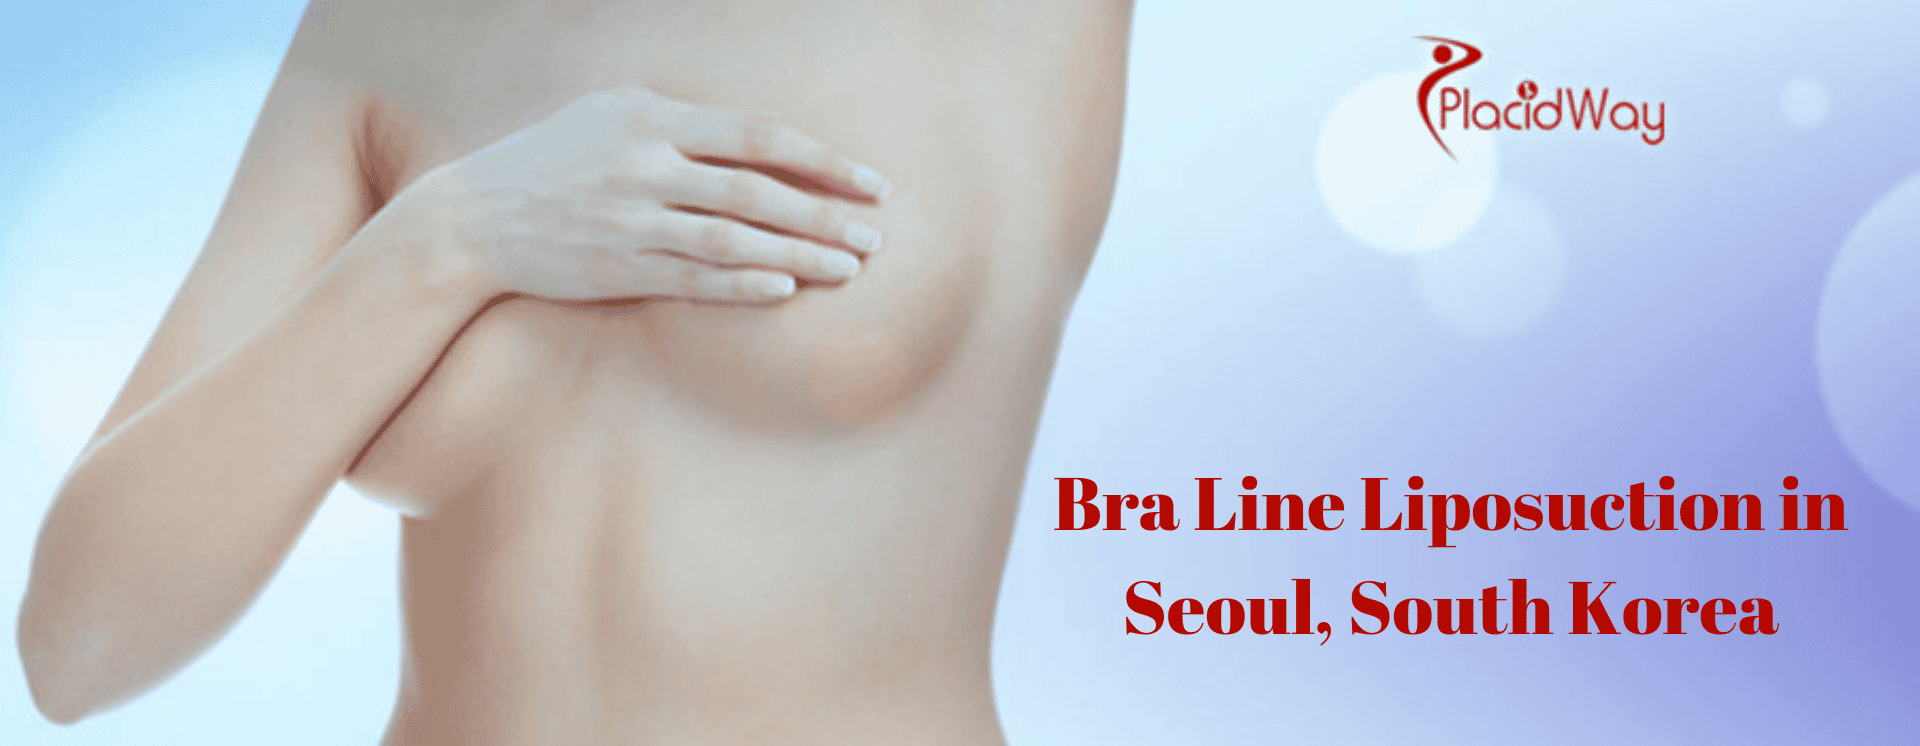 Bra Line Liposuction in Seoul, South Korea